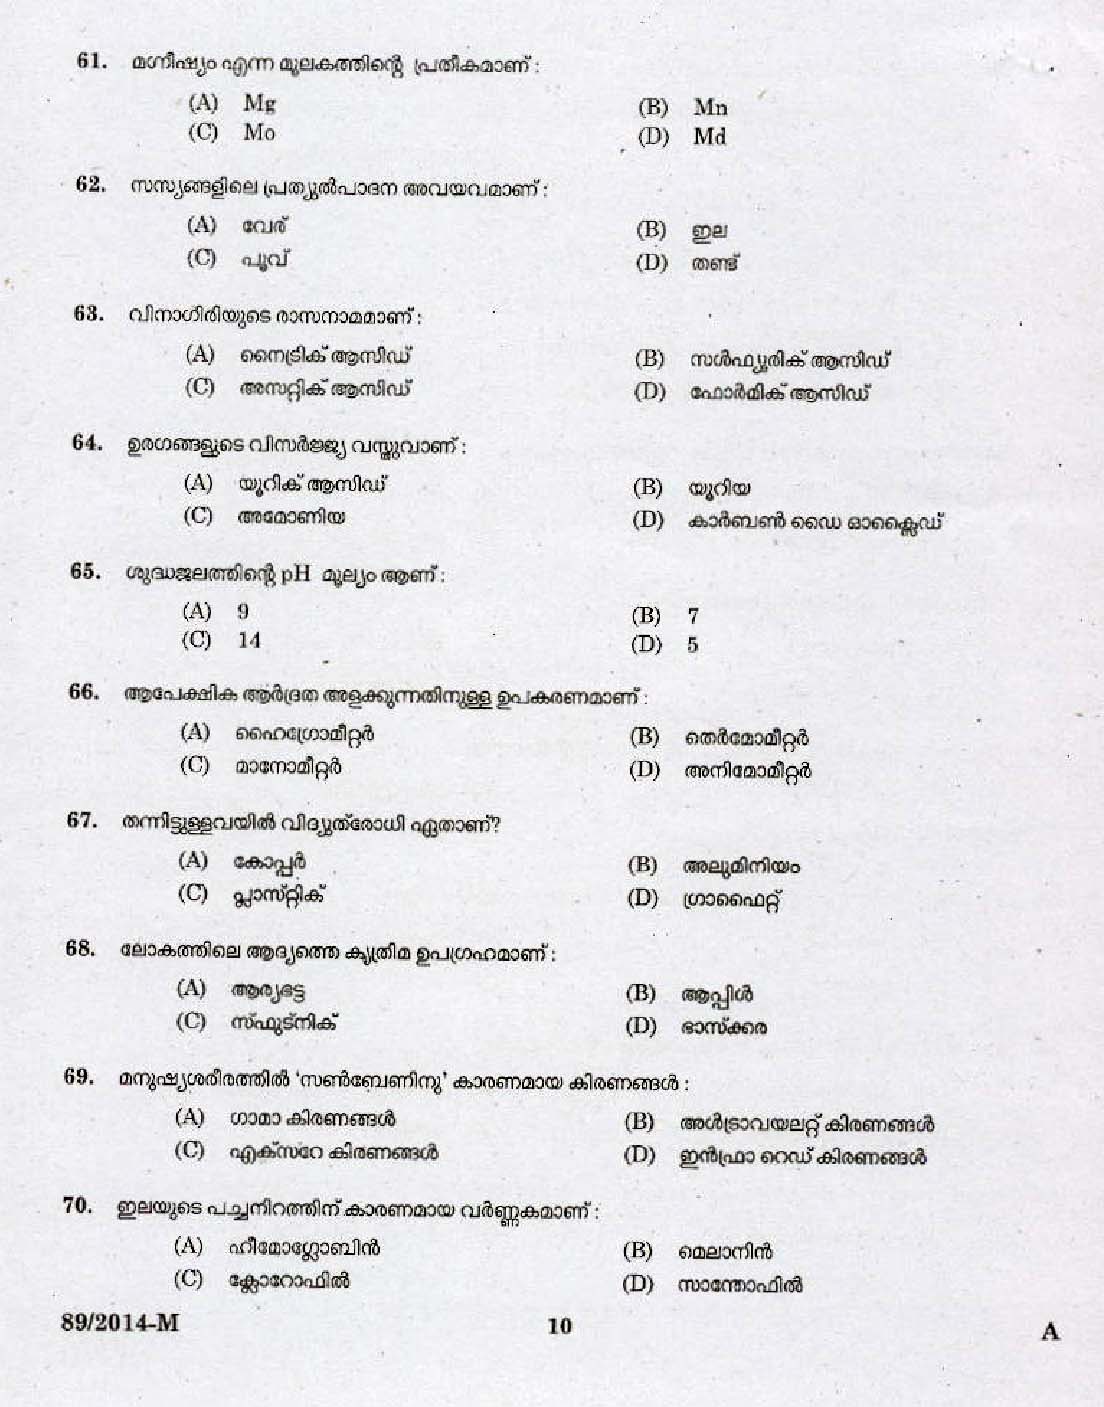 Kerala PSC Attender Exam 2014 Question Paper Code 892014 M 8